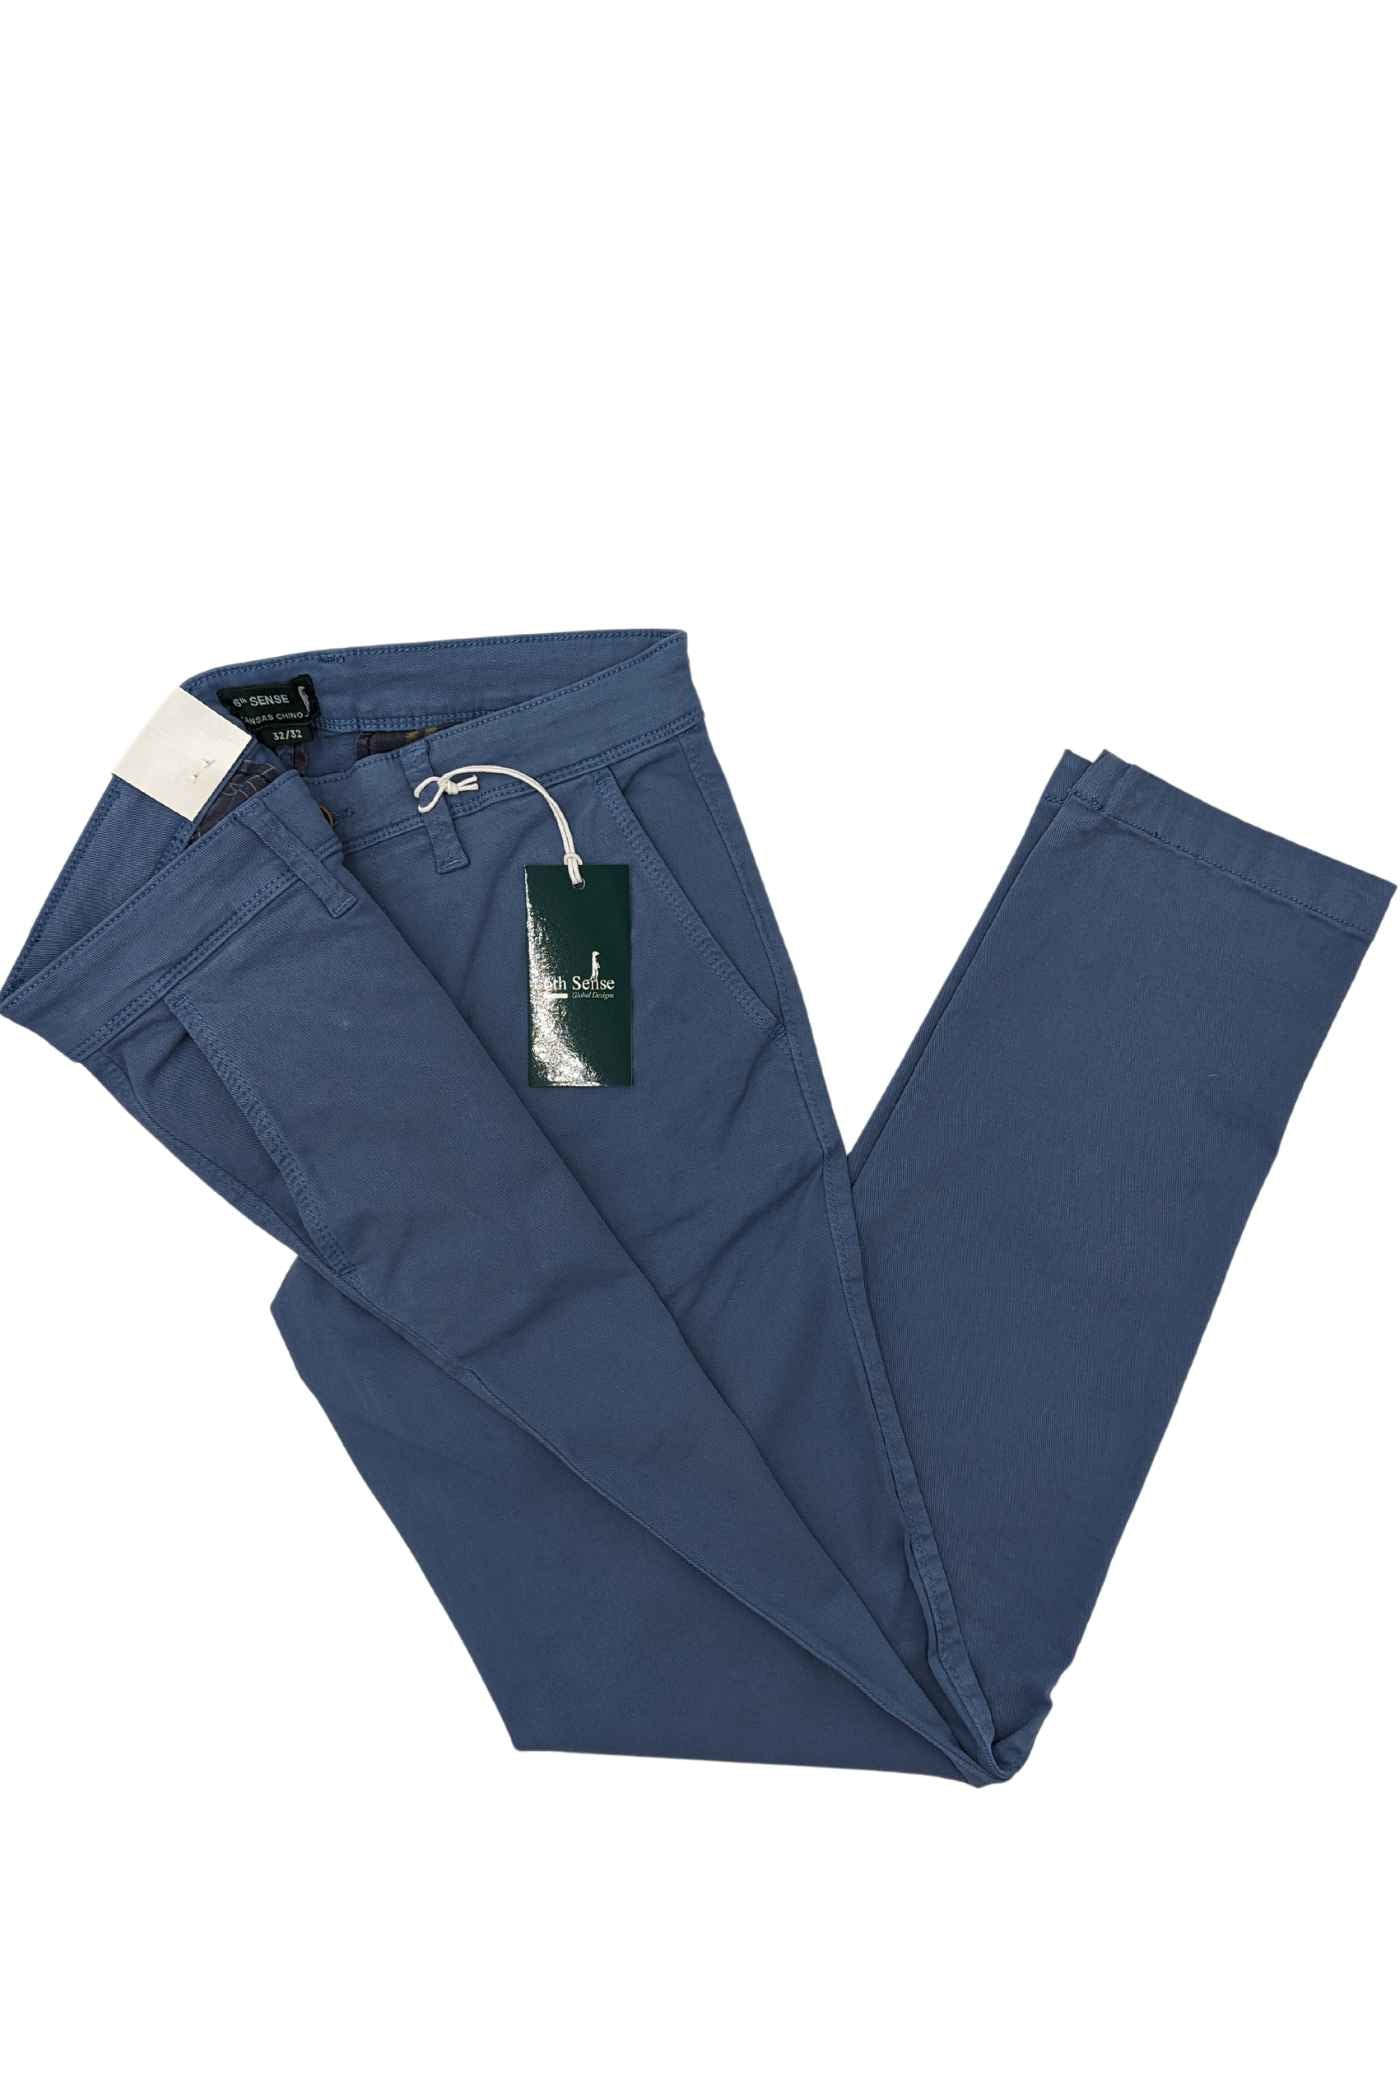 Kansas Blue Grey Tapered Fit Chinos-Pocket detail